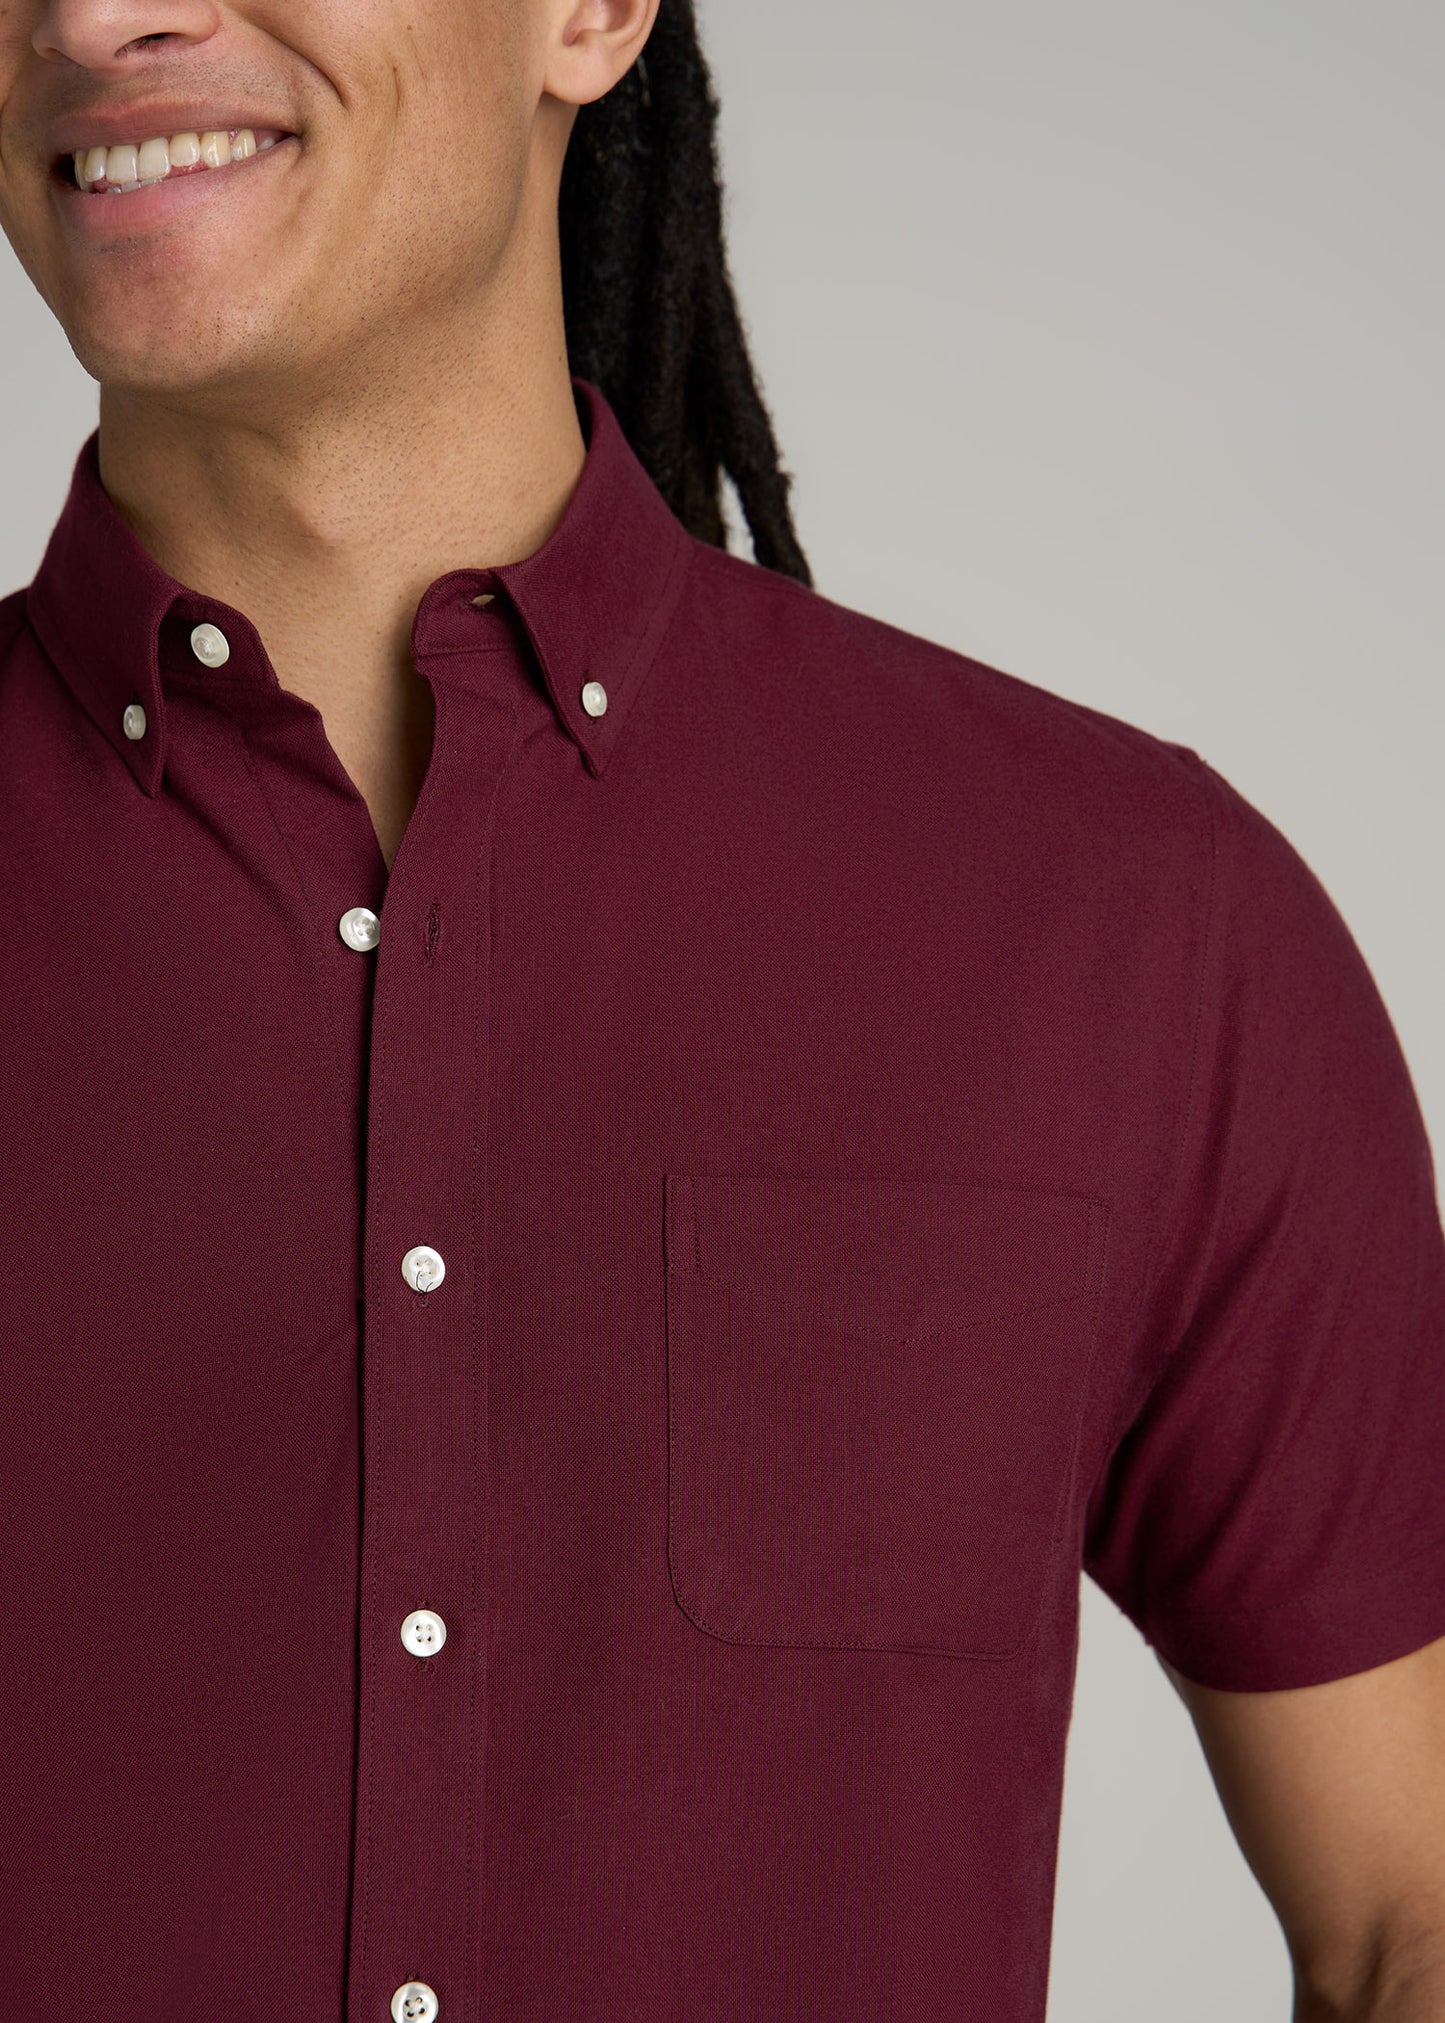 Short Sleeve Oxford Button Shirt For Tall Men in Dark Cherry